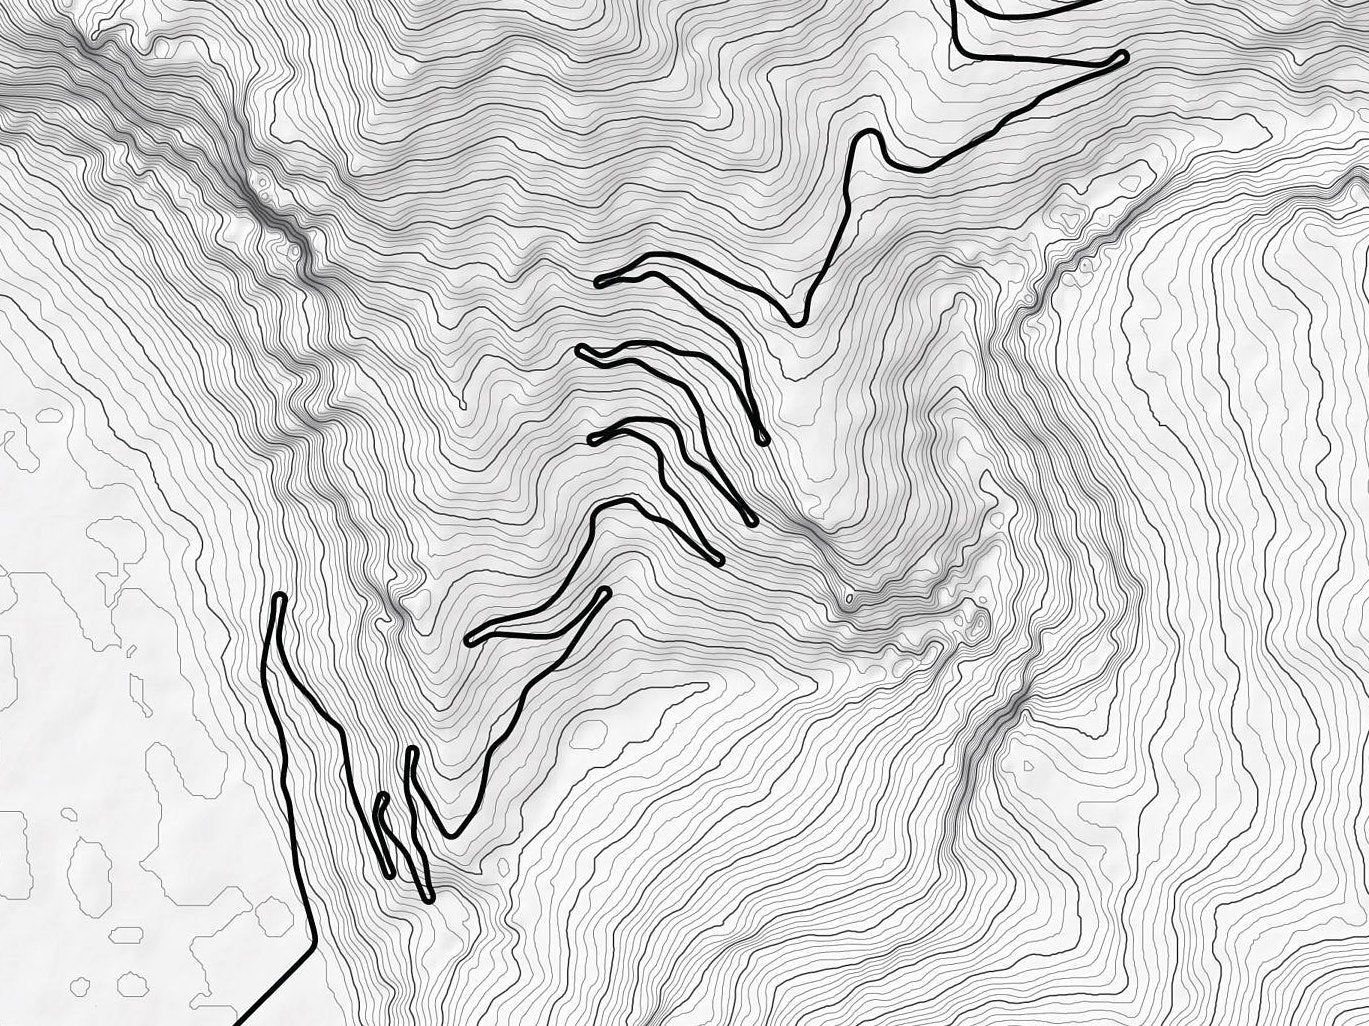 Alpe d'Huez climb, Tour de France Bike raceTopography Elevation Print Wall Art